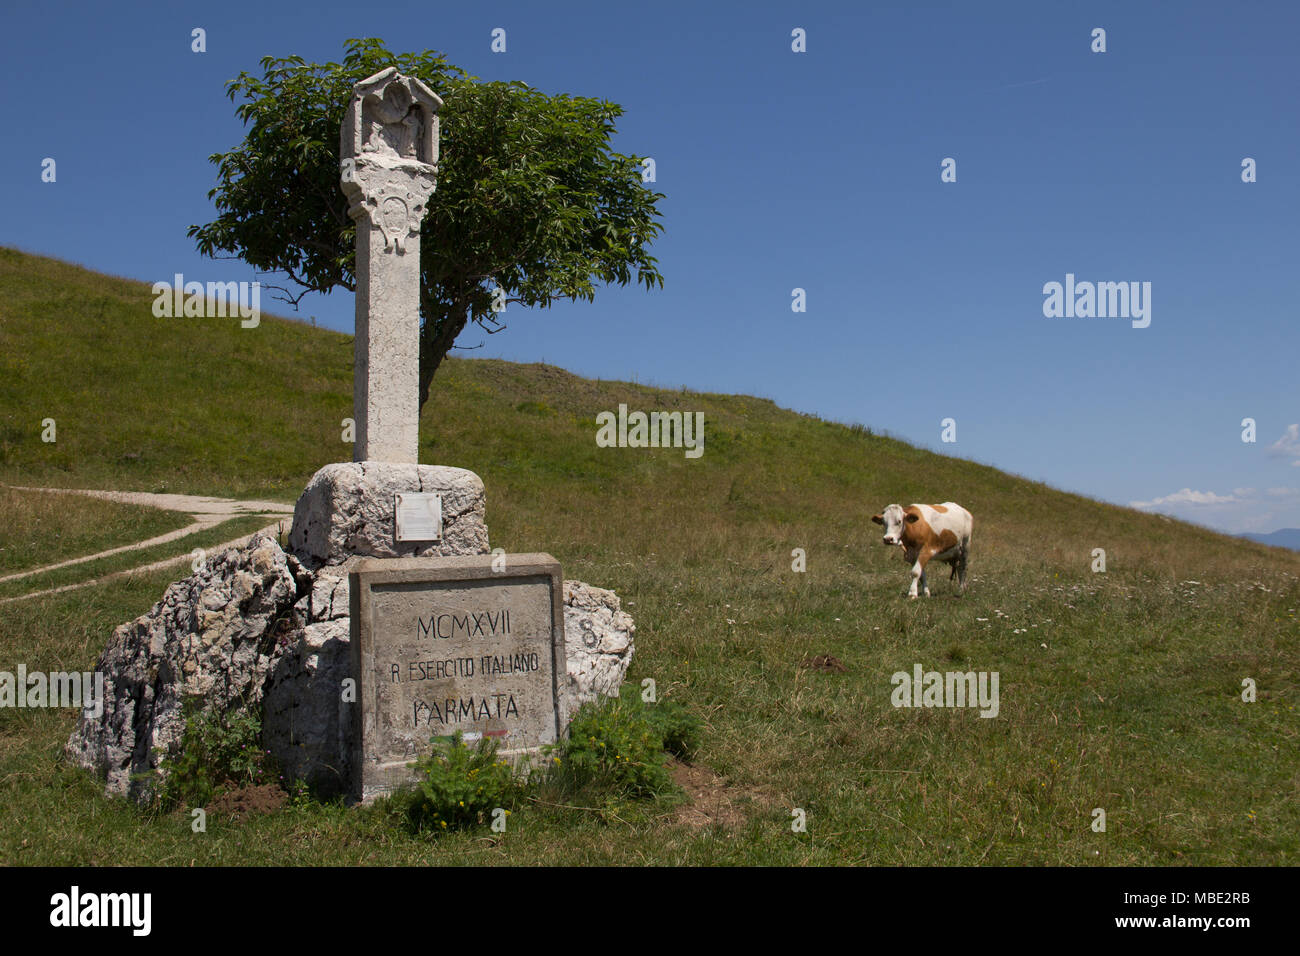 A religious monument made from stone near San Valentino, Italy Stock Photo